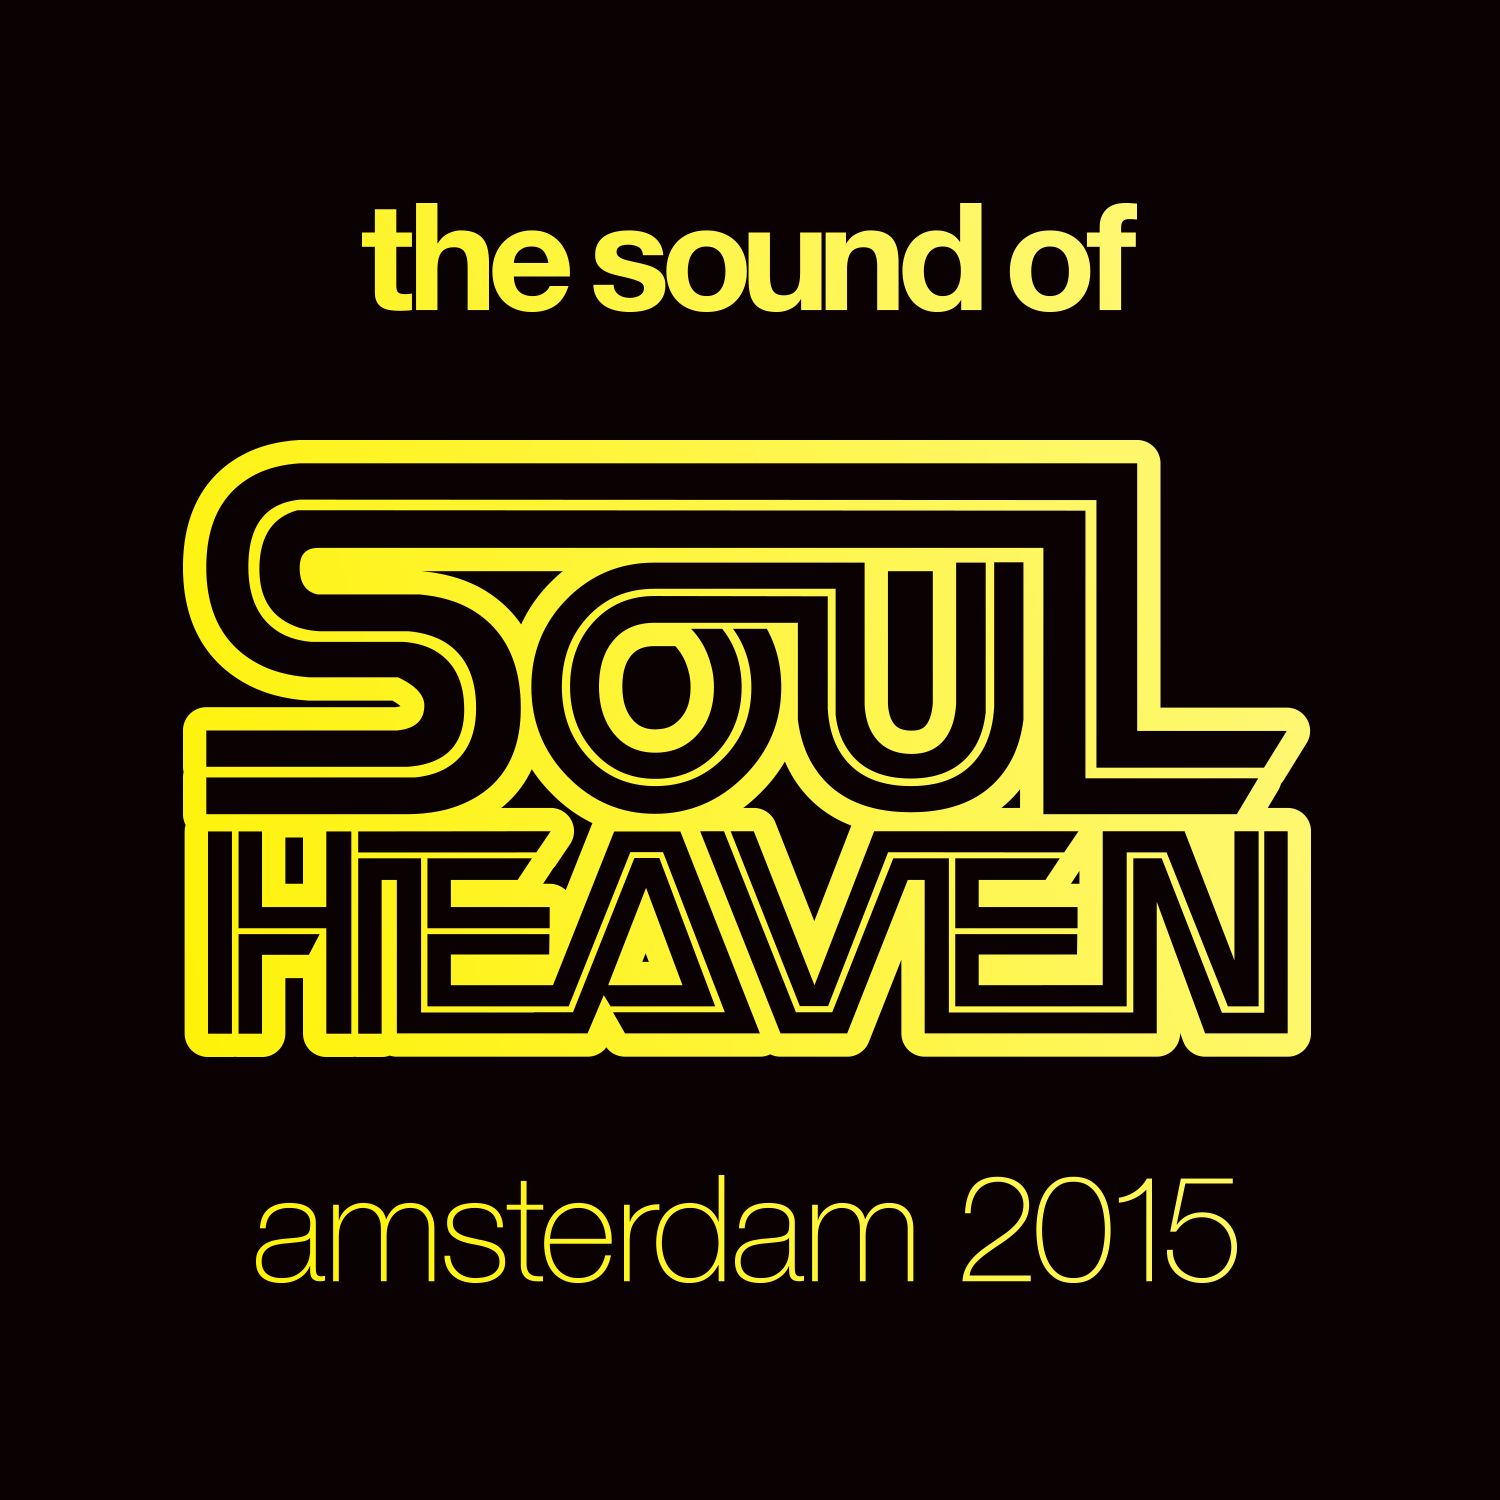 the_sound_of_soul_heaven_amsterdam_2015_1500x1500.jpg